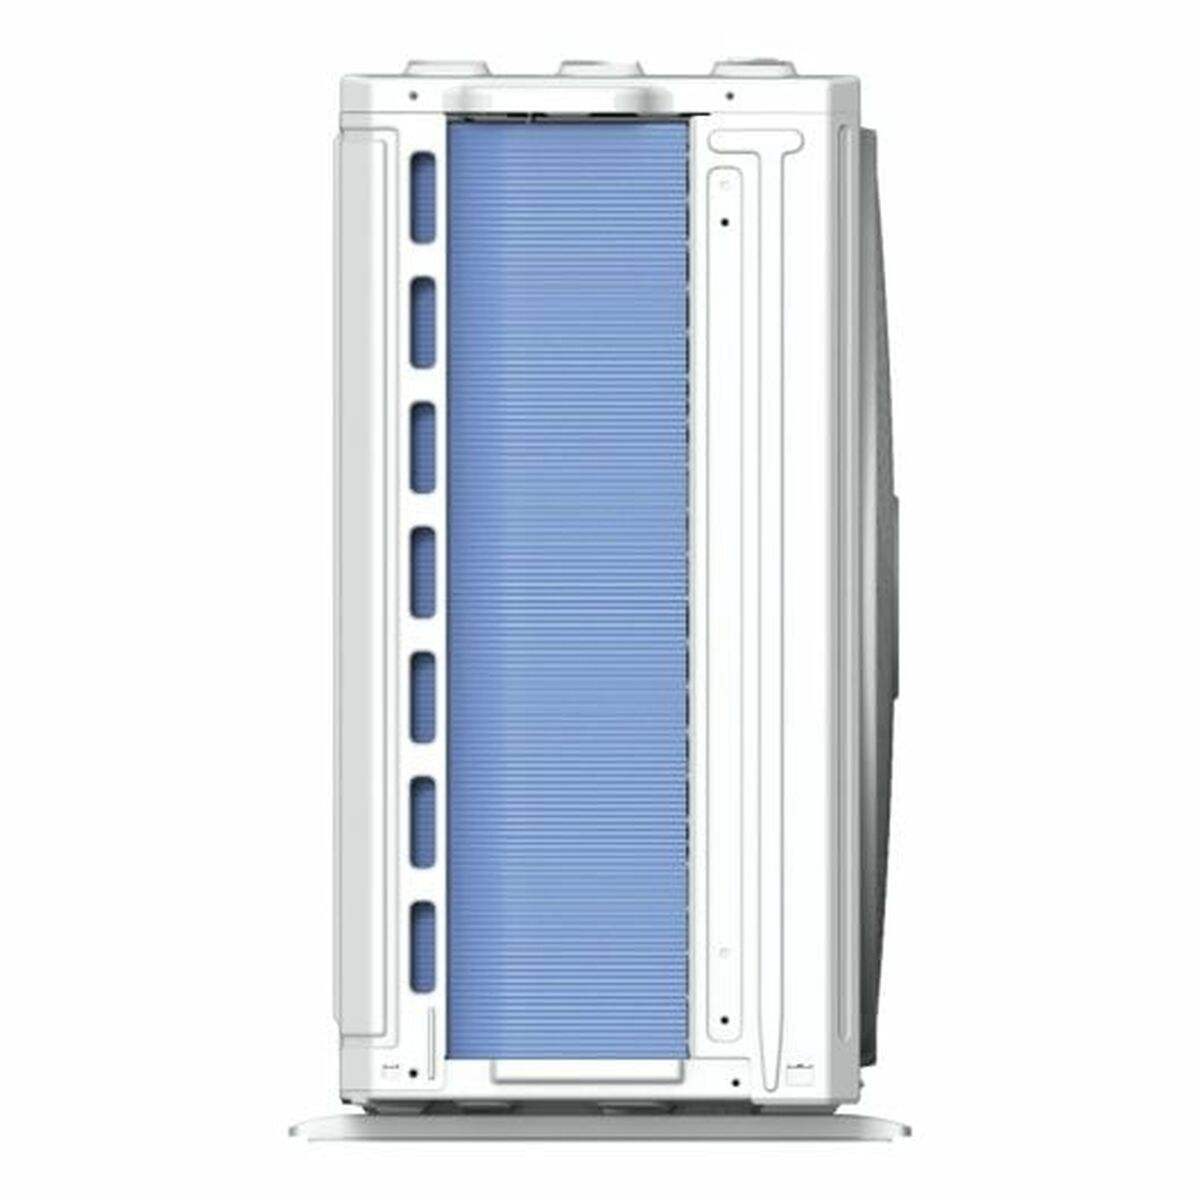 Klimaanlage Infiniton SPTTC09A2 Split Weiß